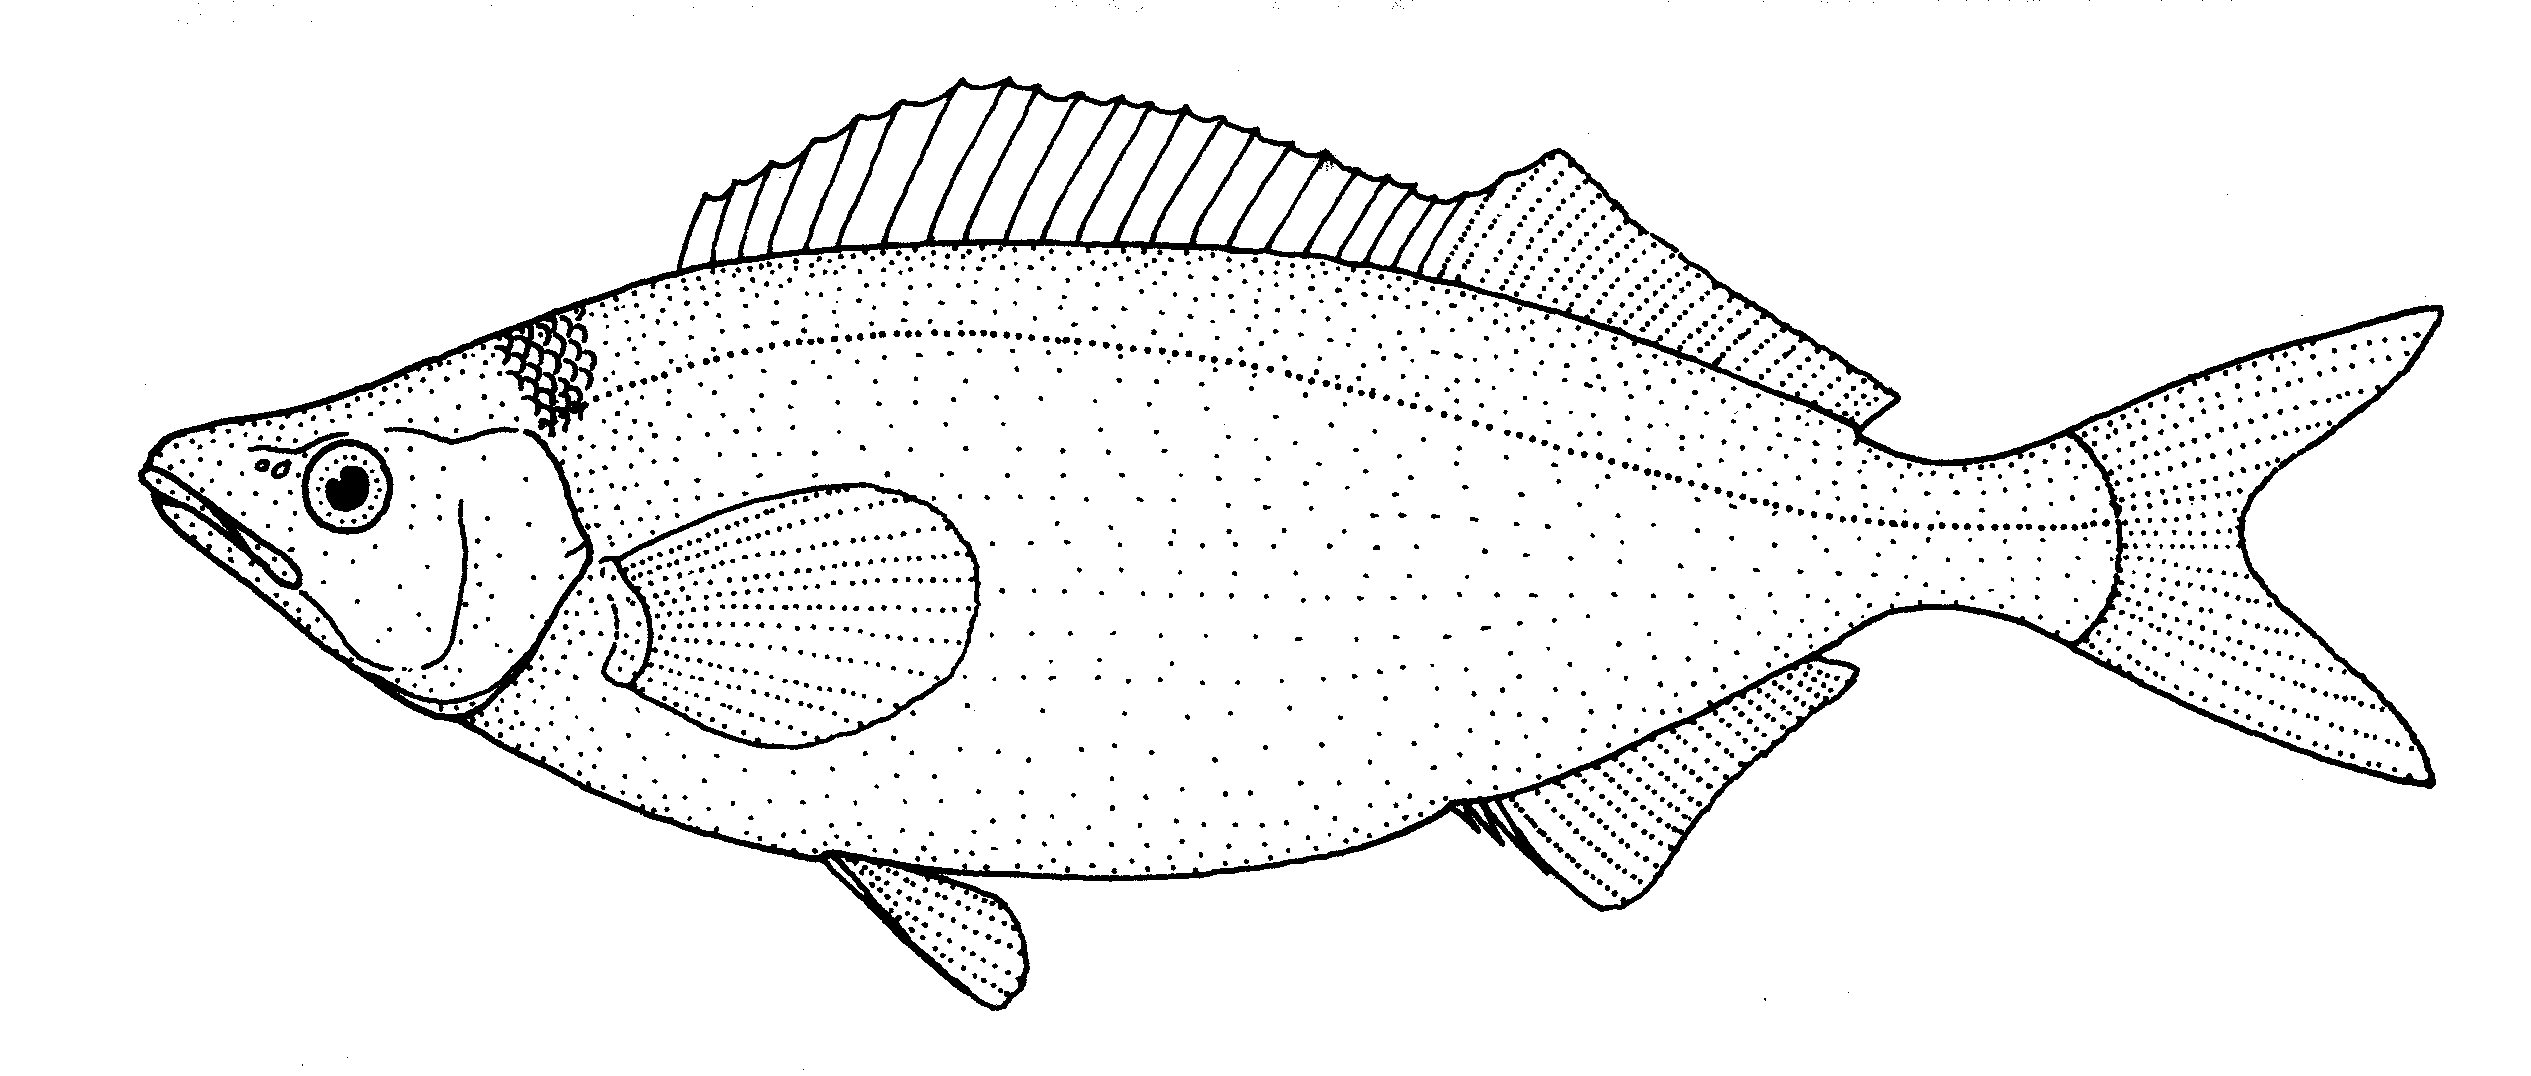 File:Mendosoma lineatum (Telescope fish).jpg - Wikimedia Commons